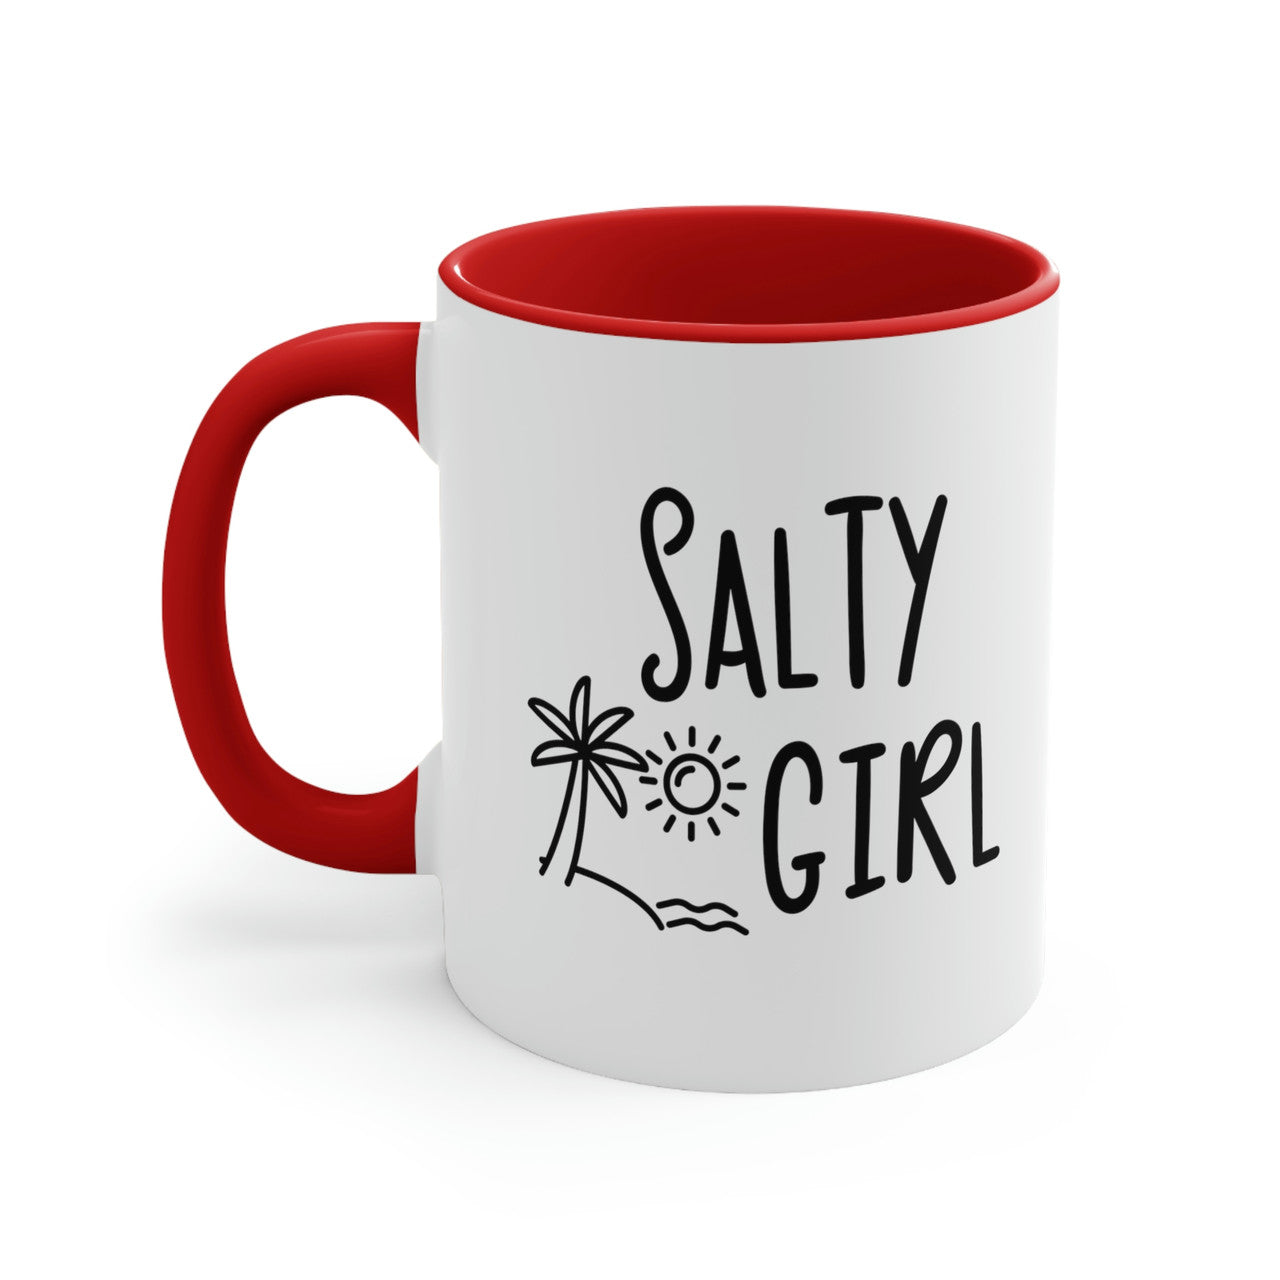 Salty Girl Ceramic Beach Coffee Mug, 5 Colors Mugs New England Trading Co Red  